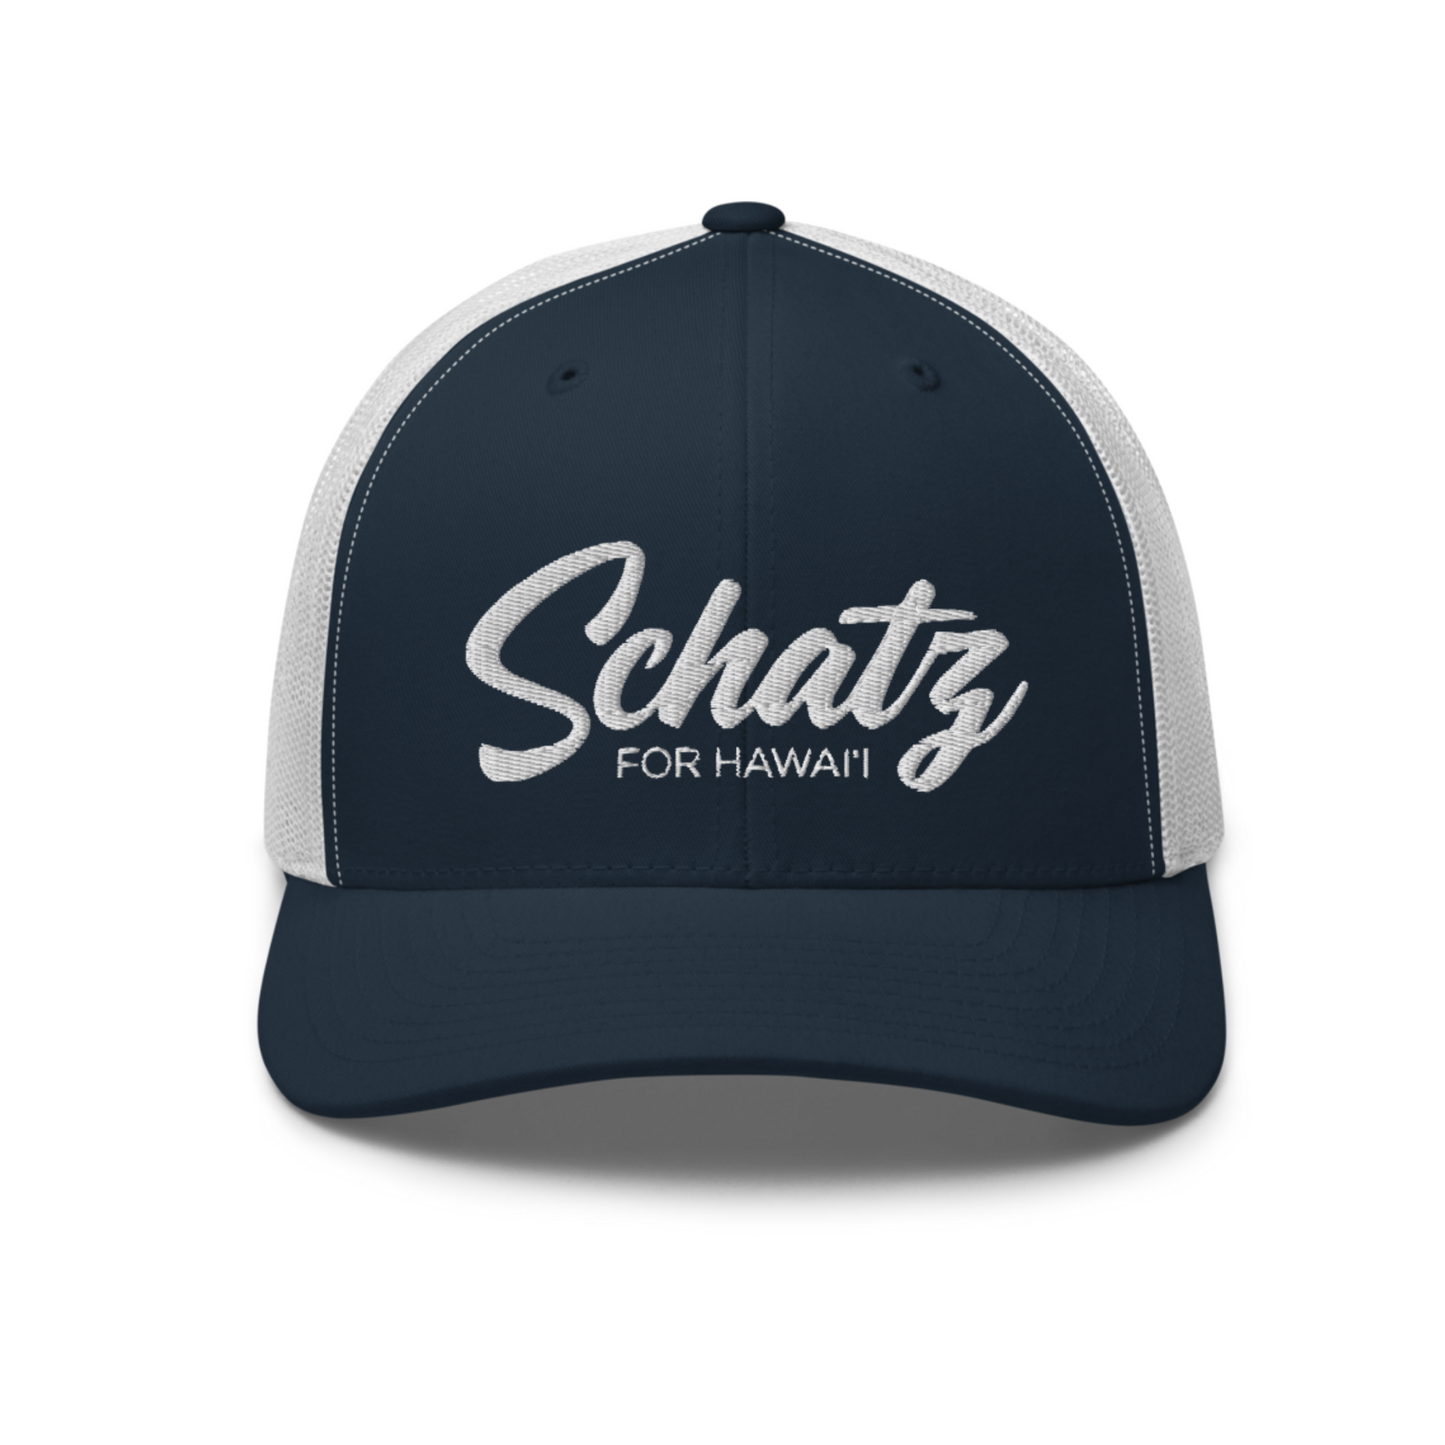 Brian Schatz for Hawaii Trucker Hat